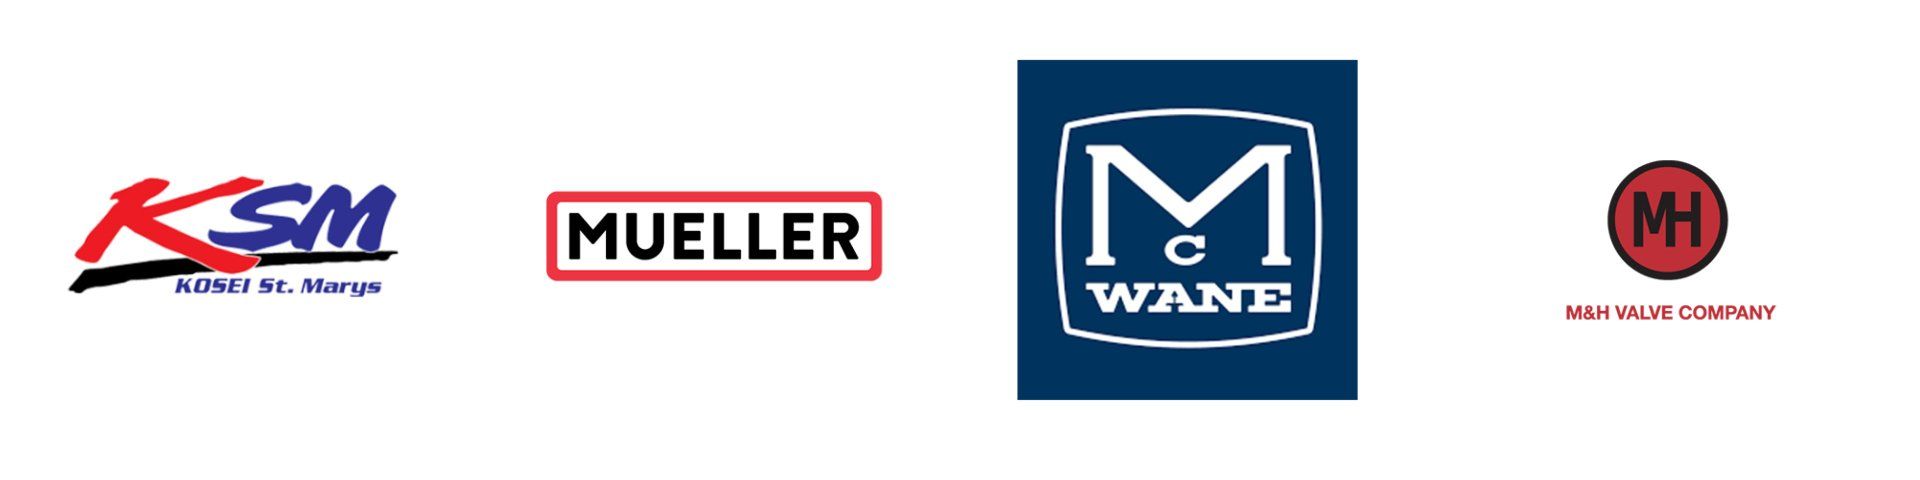 KSM, Mueller, McWane and M&H valve company Logos